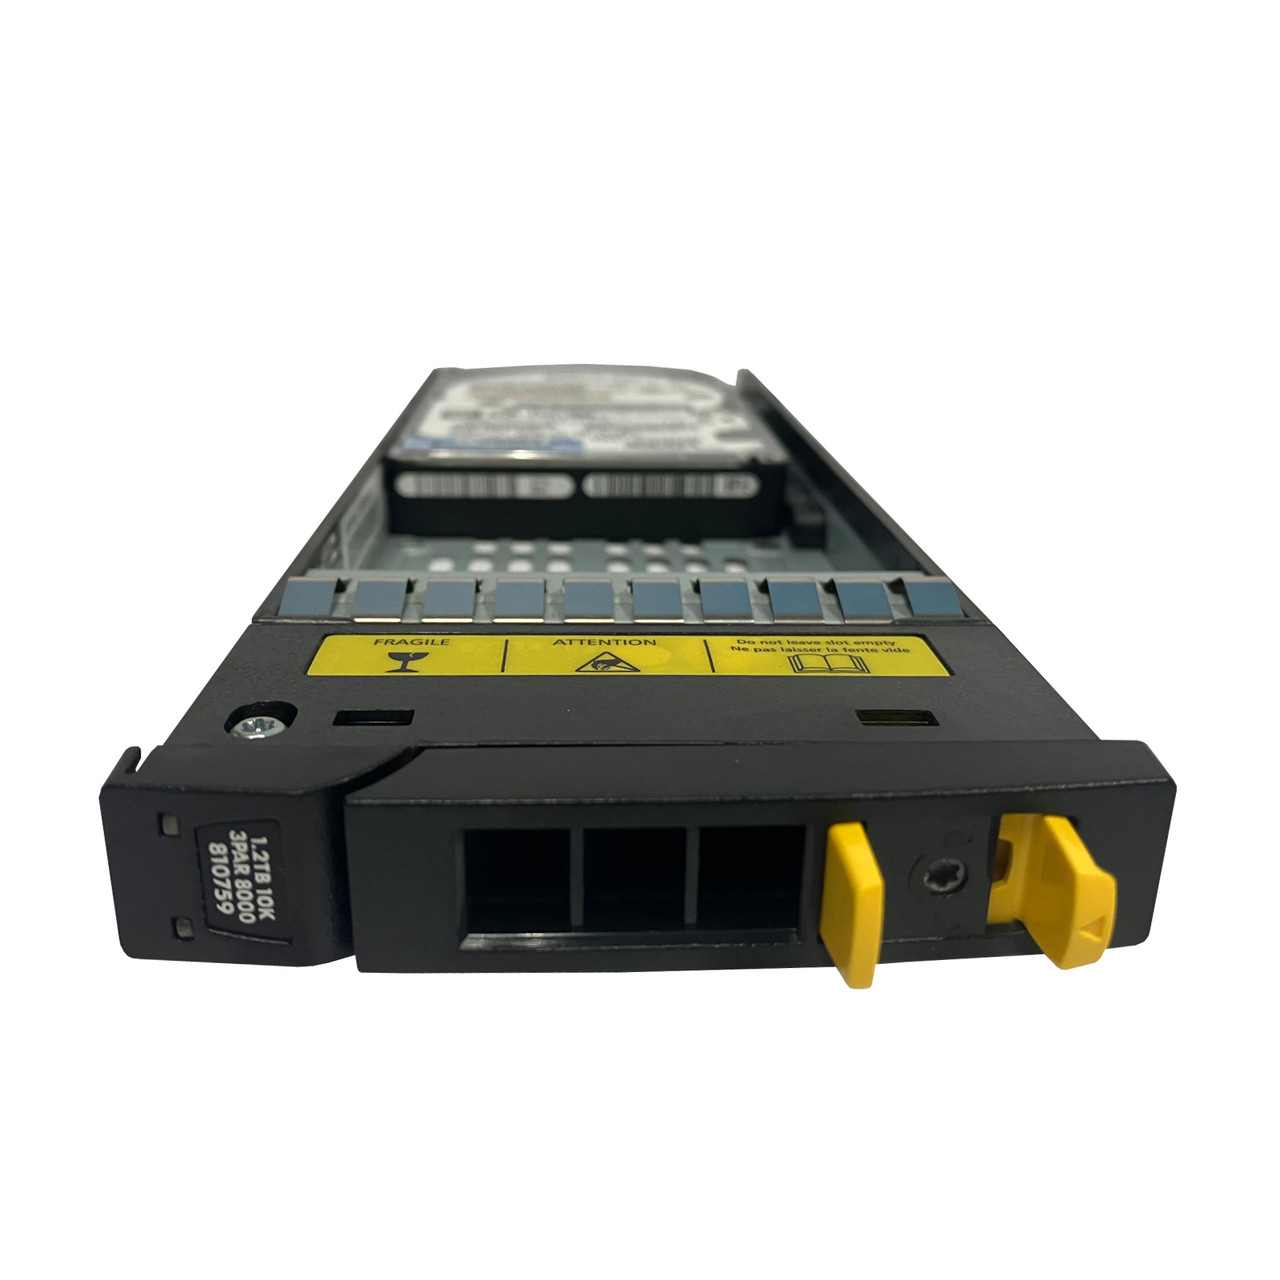 HPe 810759-001 3Par 1.2TB 10K SAS K2P93B